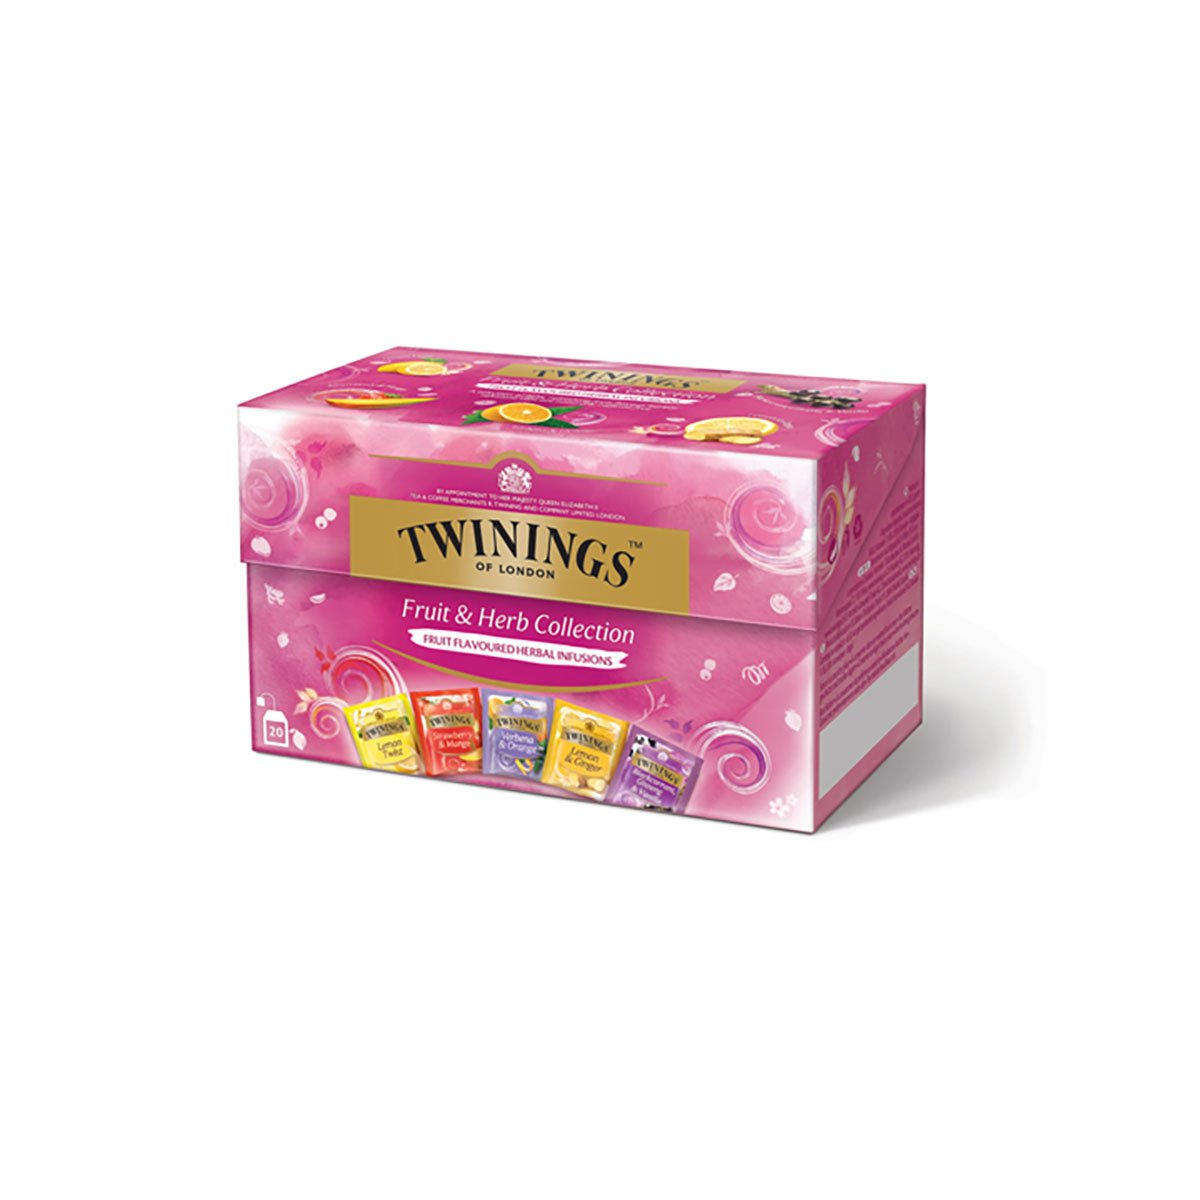 Ceai infuzie Mix 5 gusturi fructe si plante Twinings, 20 x 1.8 g noriel.ro